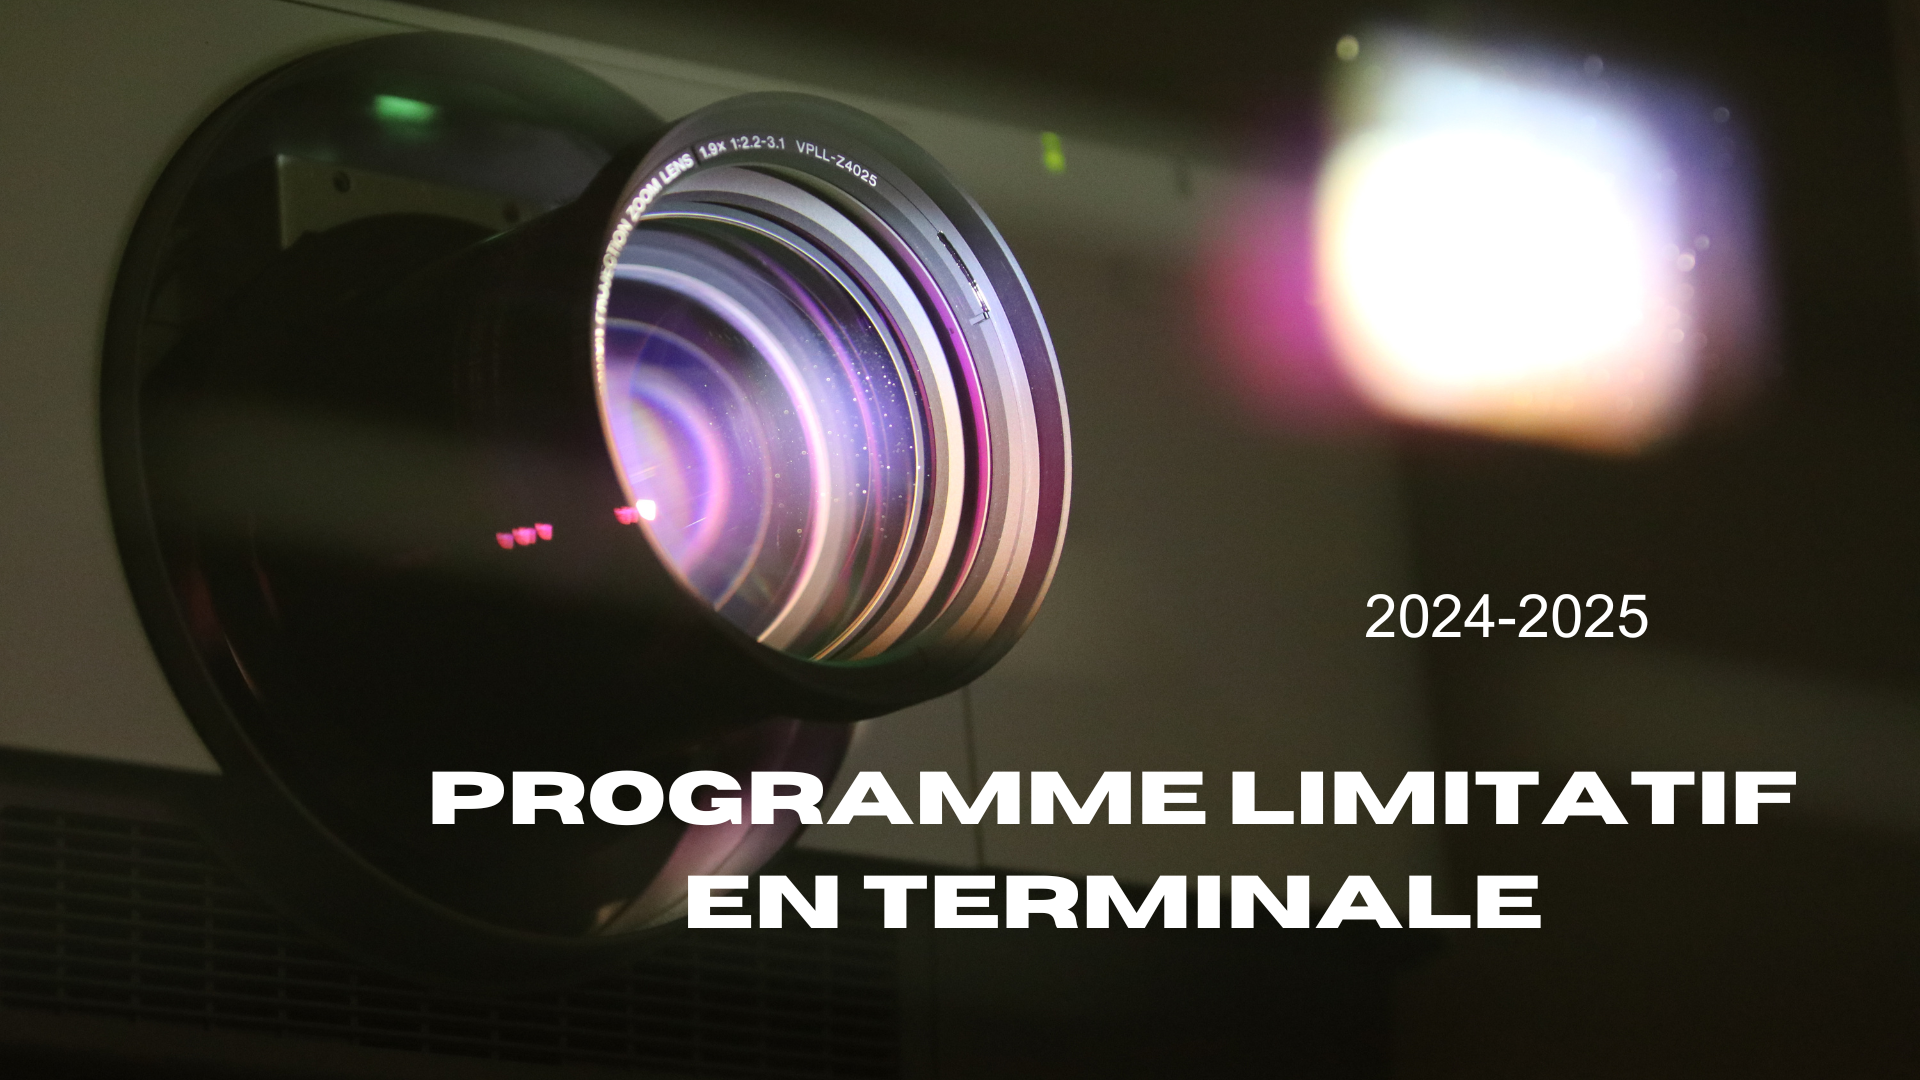 Le programme limitatif 2024-2025